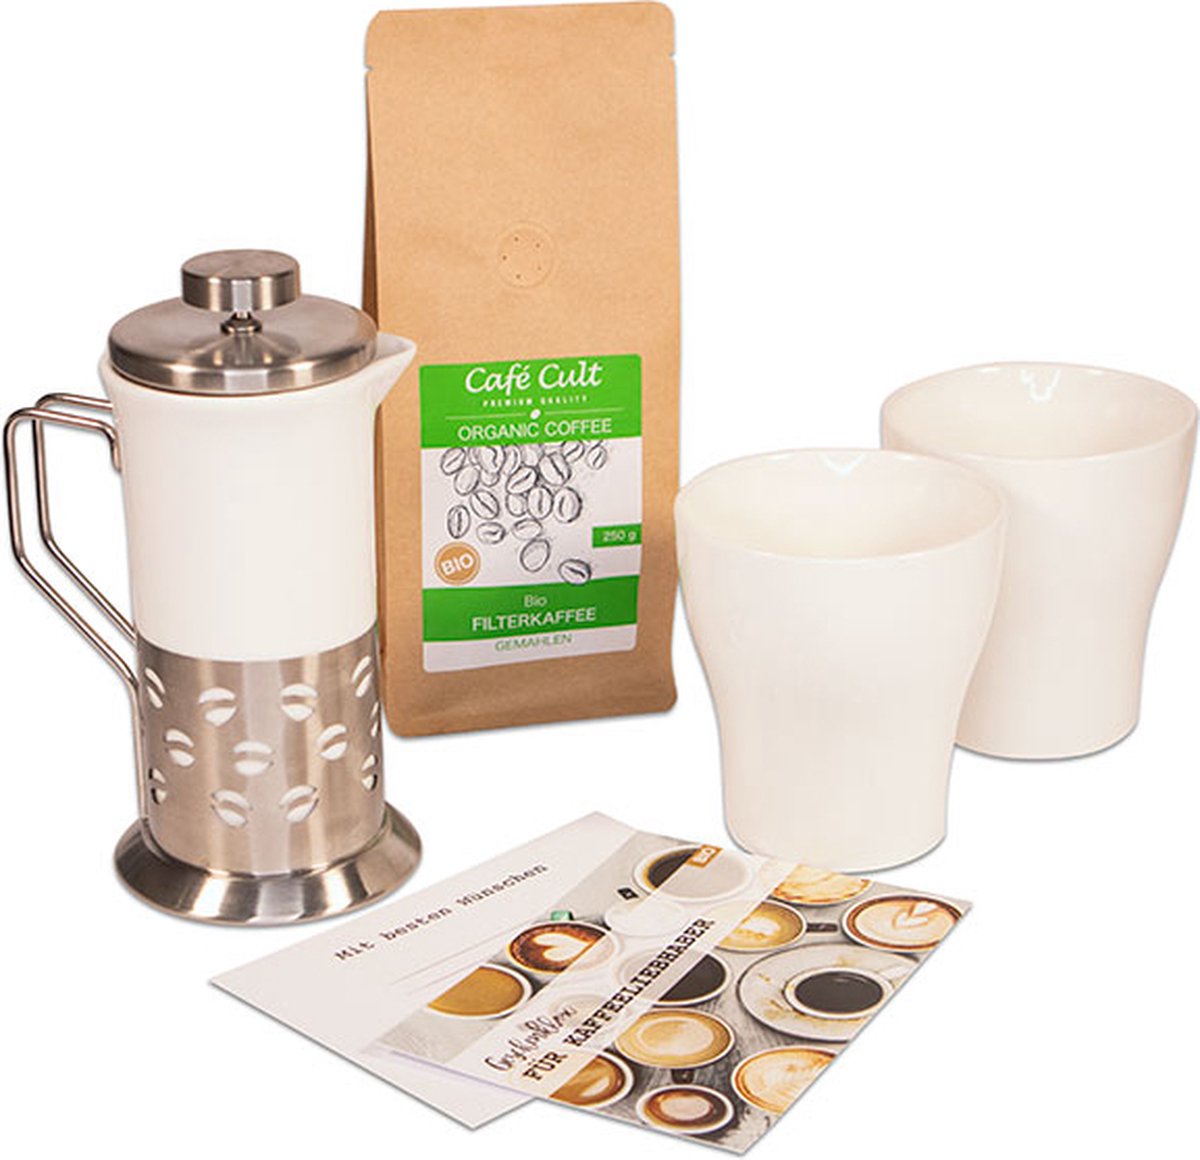 Koffie Cadeau Set - Voor de Koffie Liefhebber - 3 Delig incl 250gram gemalen koffie